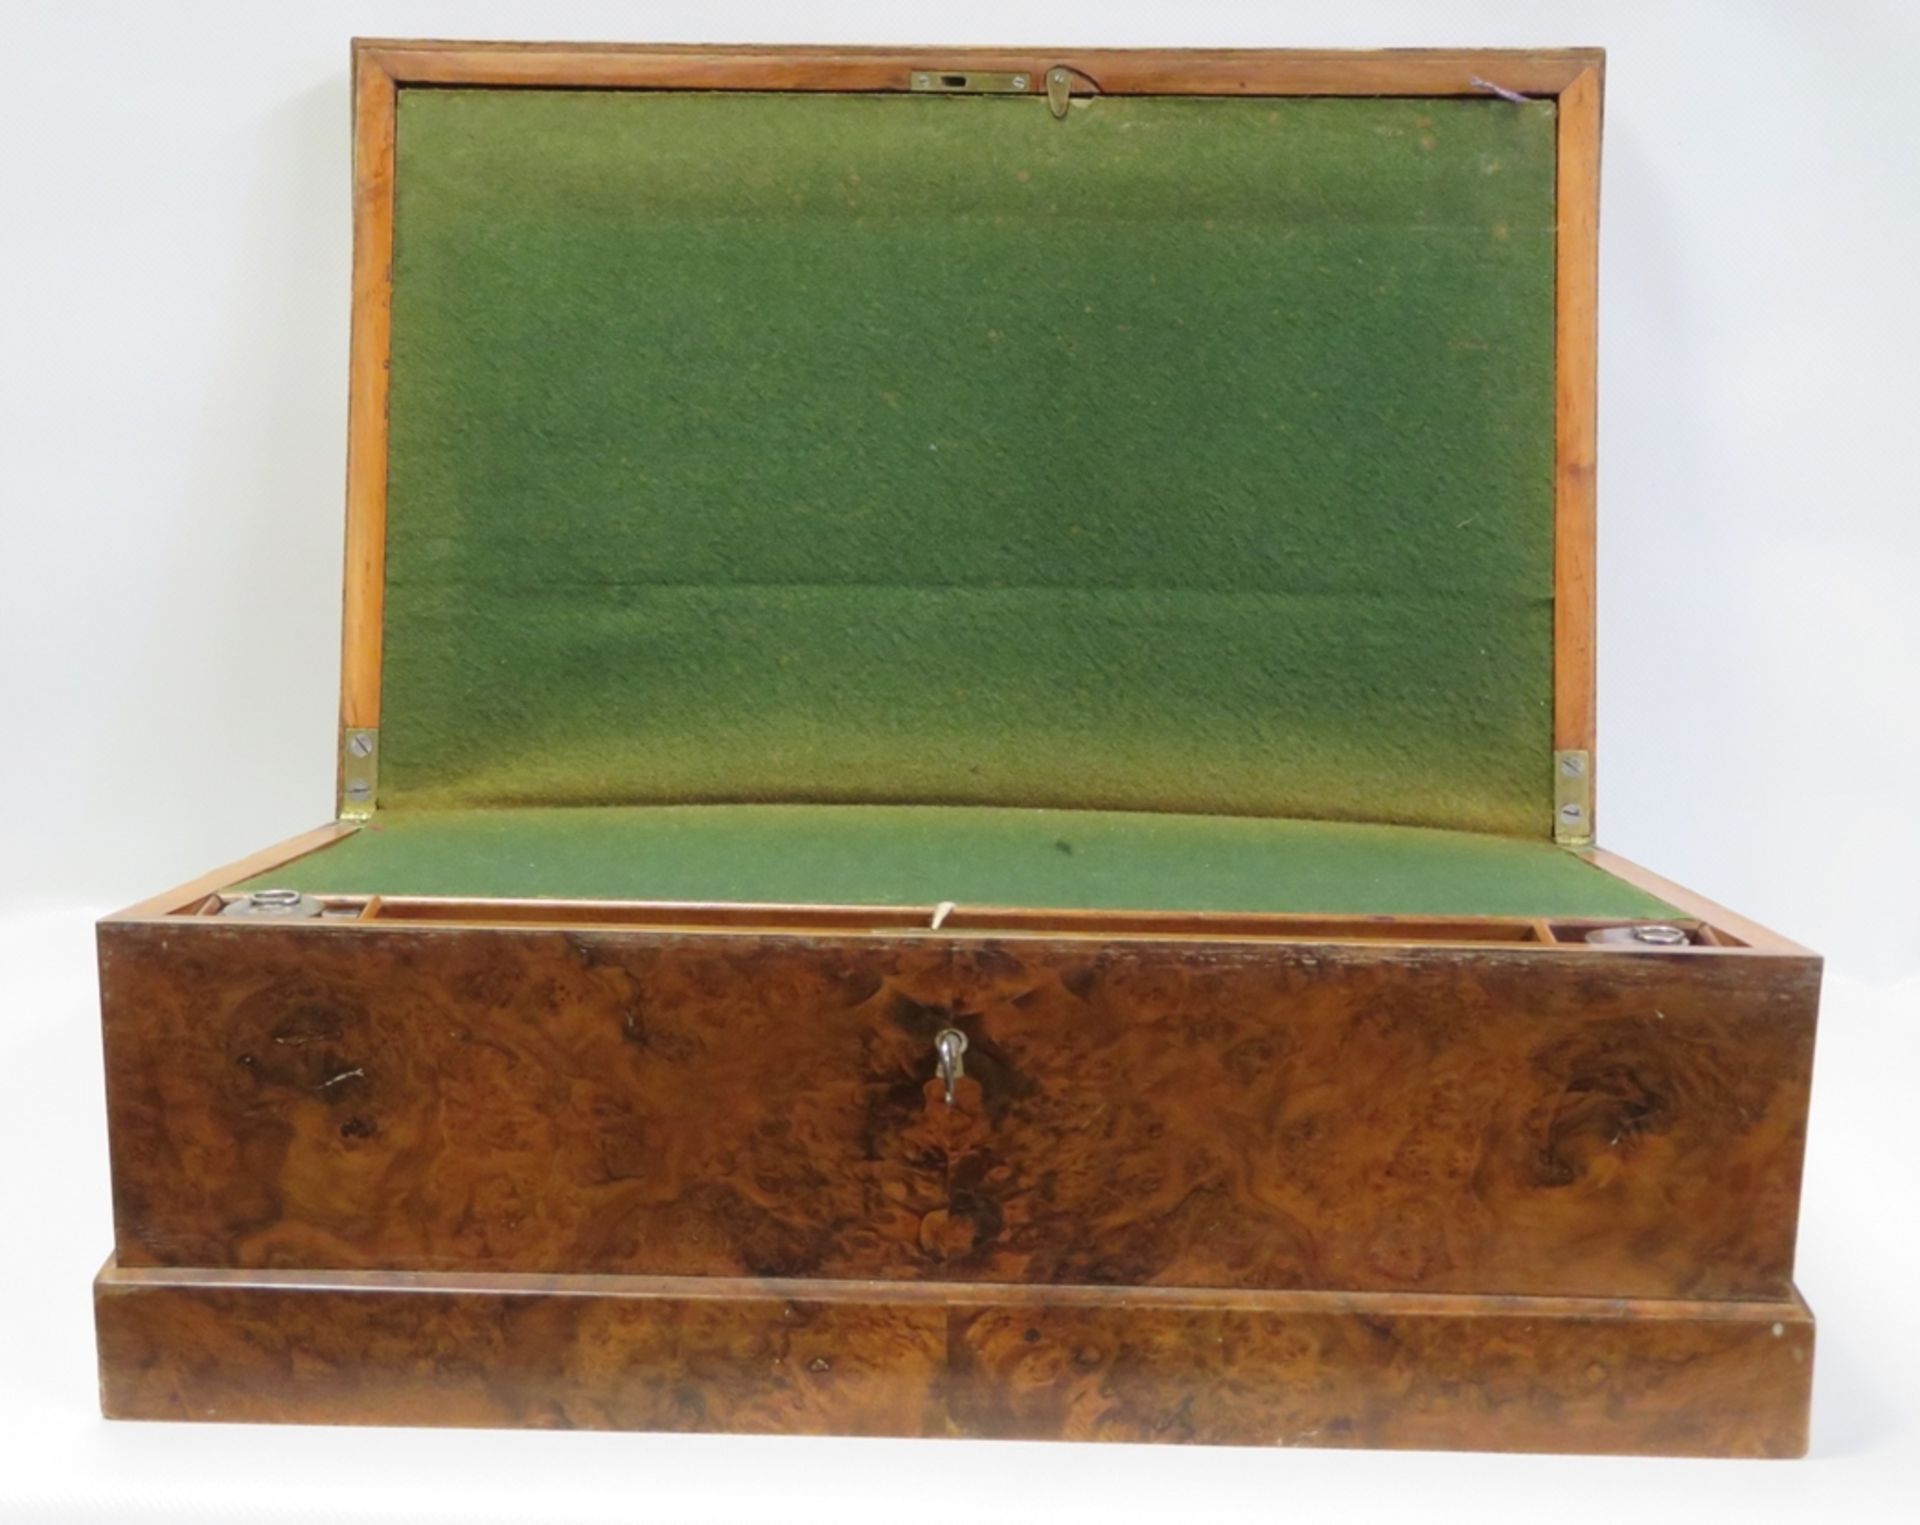 Schreibkassette, 19. Jahrhundert, Wurzelholz, 18,5 x 45 x 28 cm. - Bild 2 aus 2